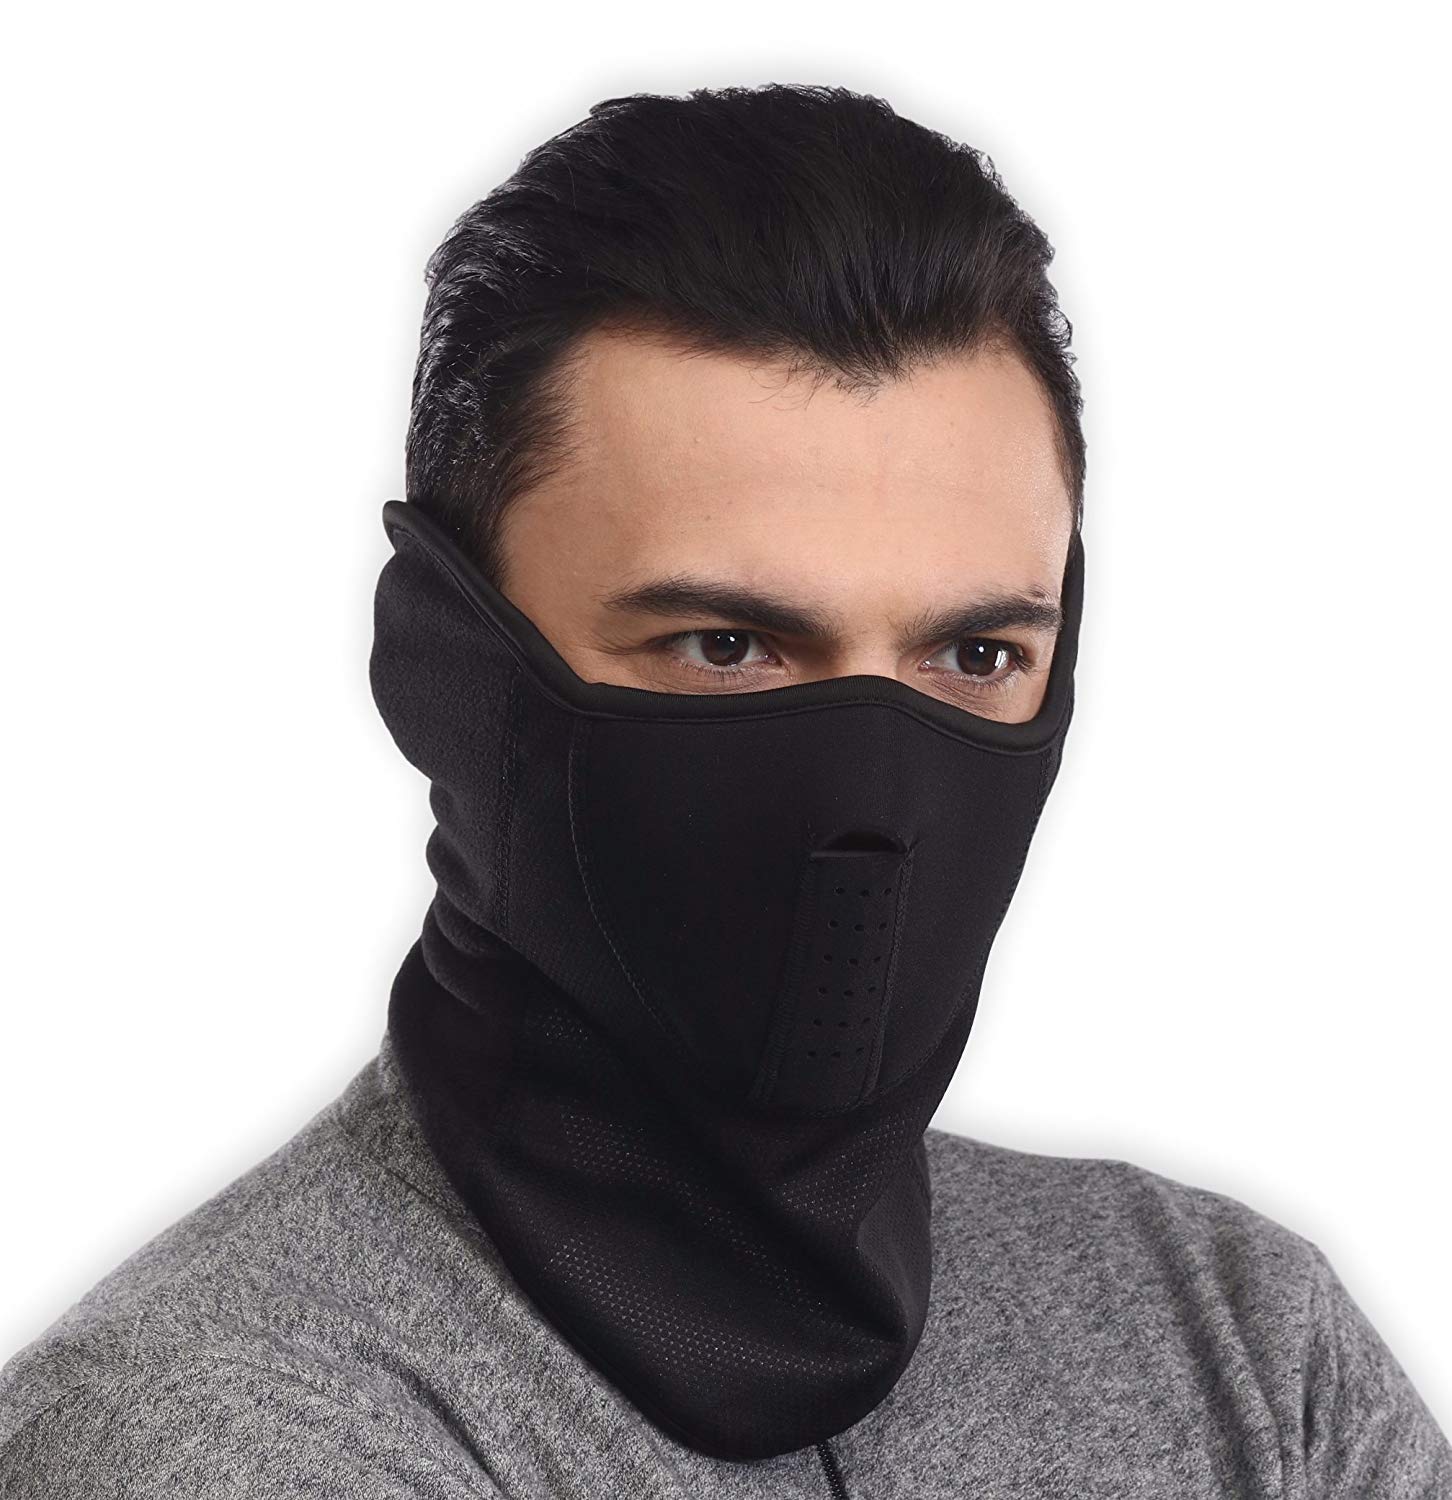 Balaclava - Ski Mask – Tough Outfitters